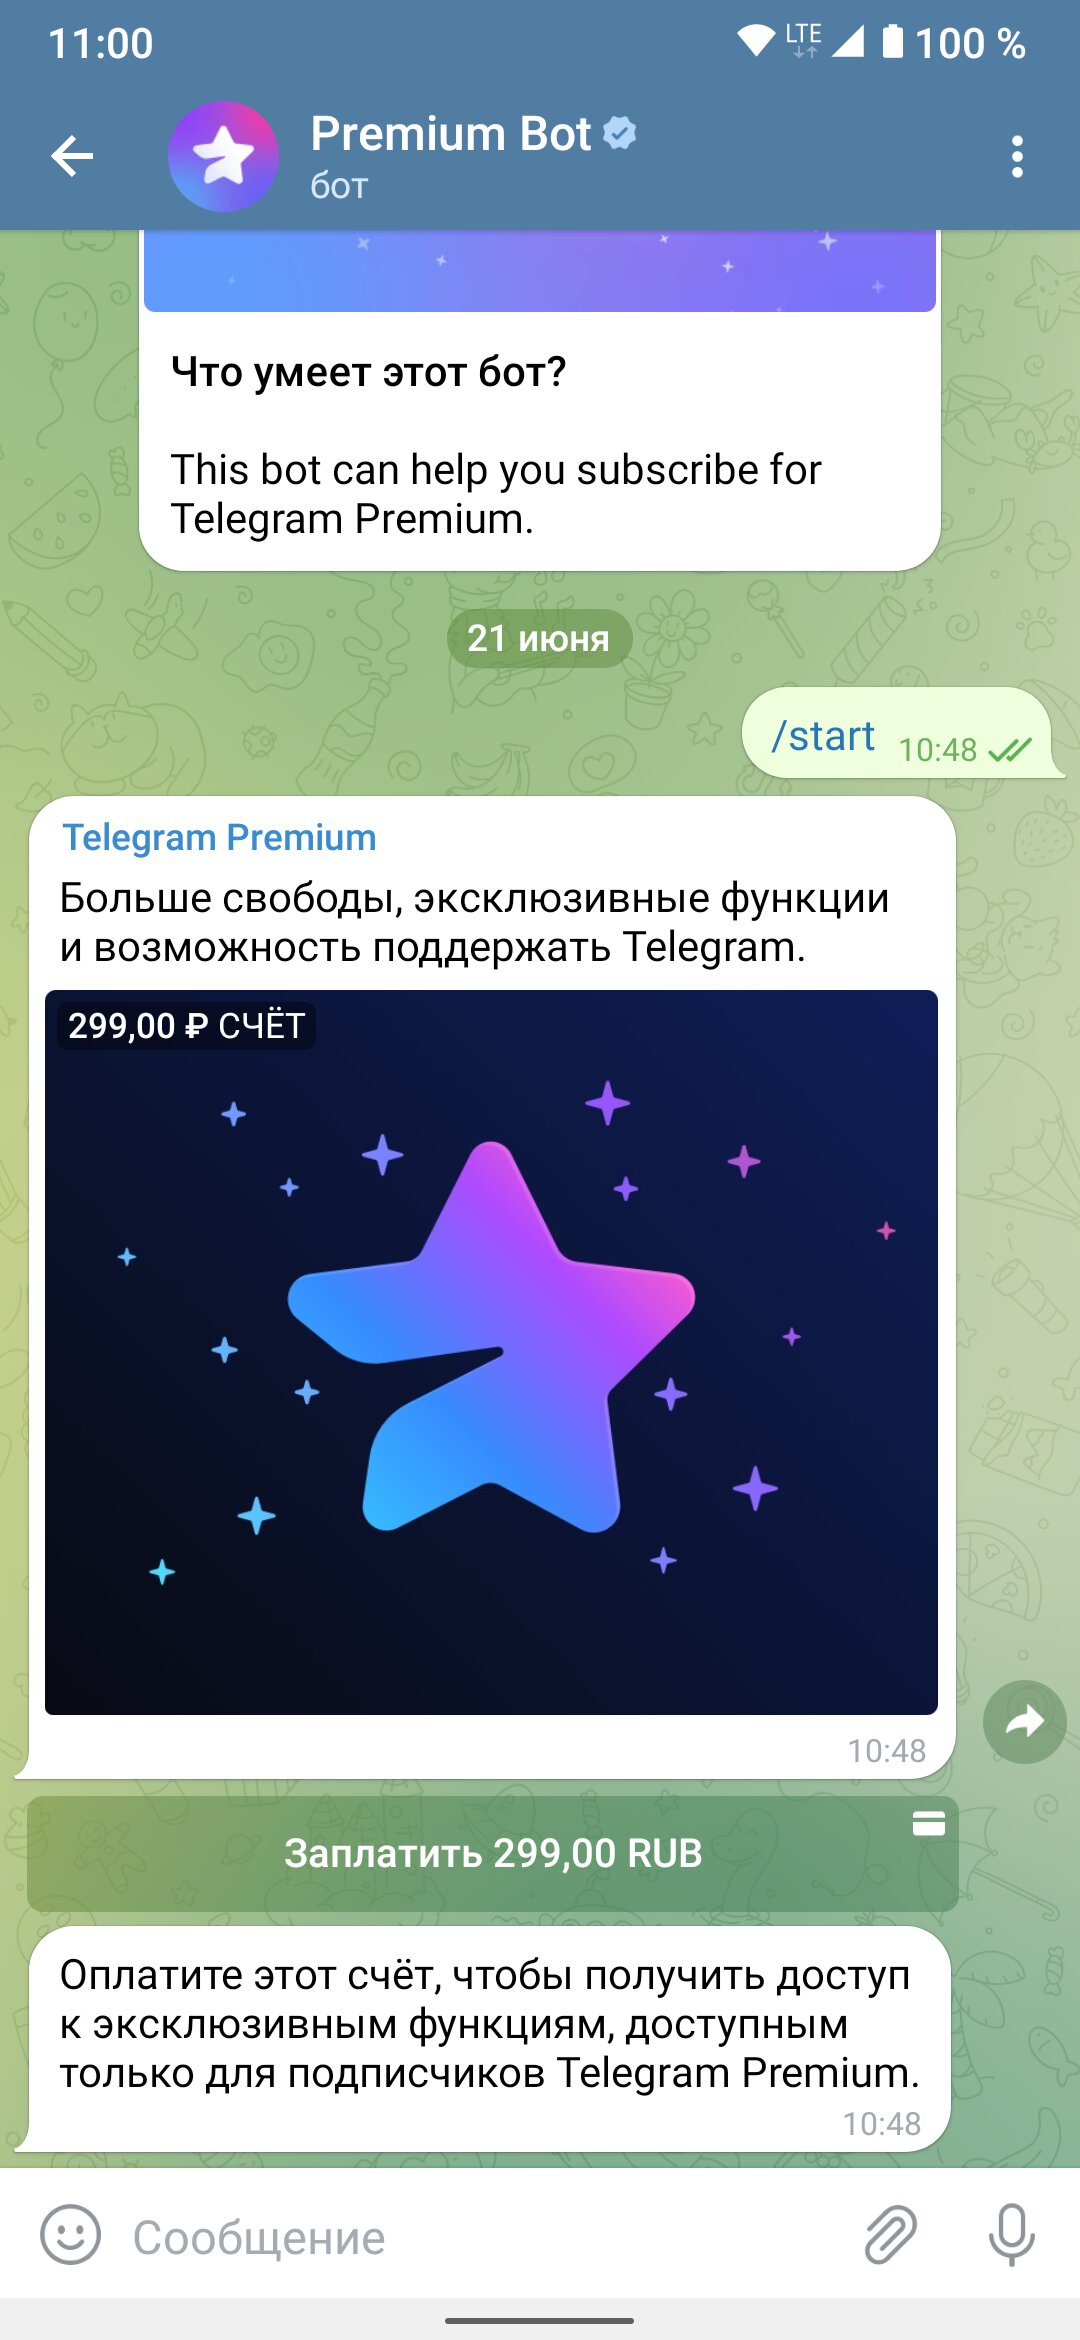 Телеграмм премиум купить бесплатно на андроид фото 108